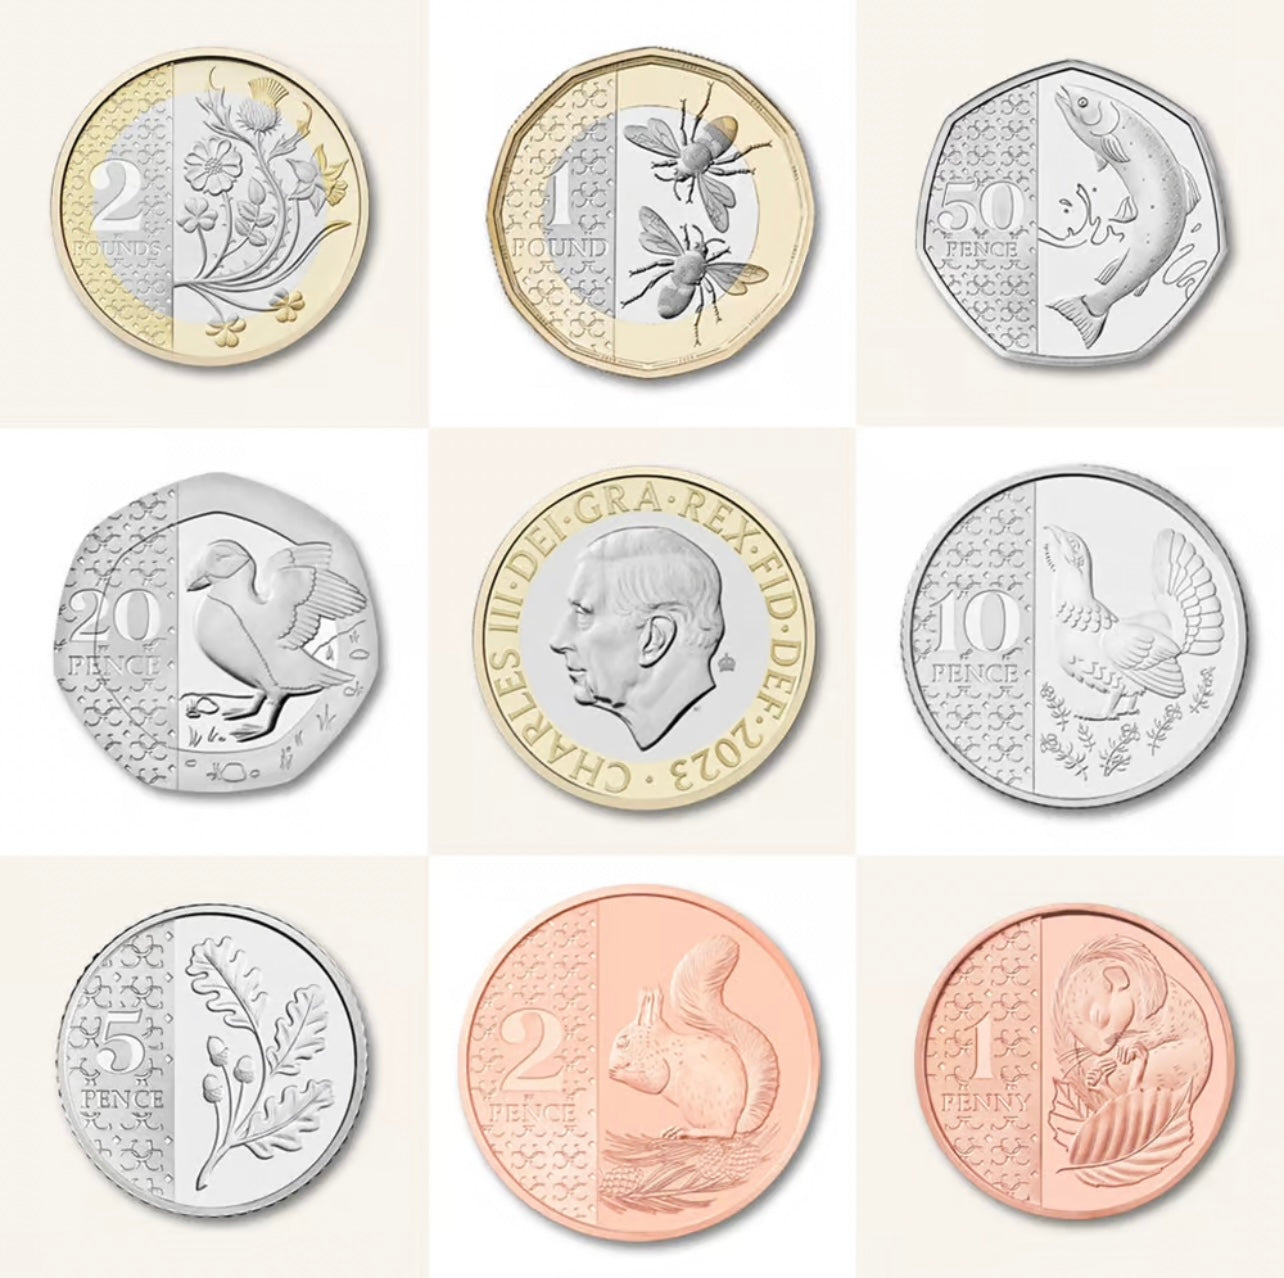 King Charles III,
£2, £1, 50p, 20p, 10p, 5p, 2p, 1p,
Definitive coin set,
2023 (B)